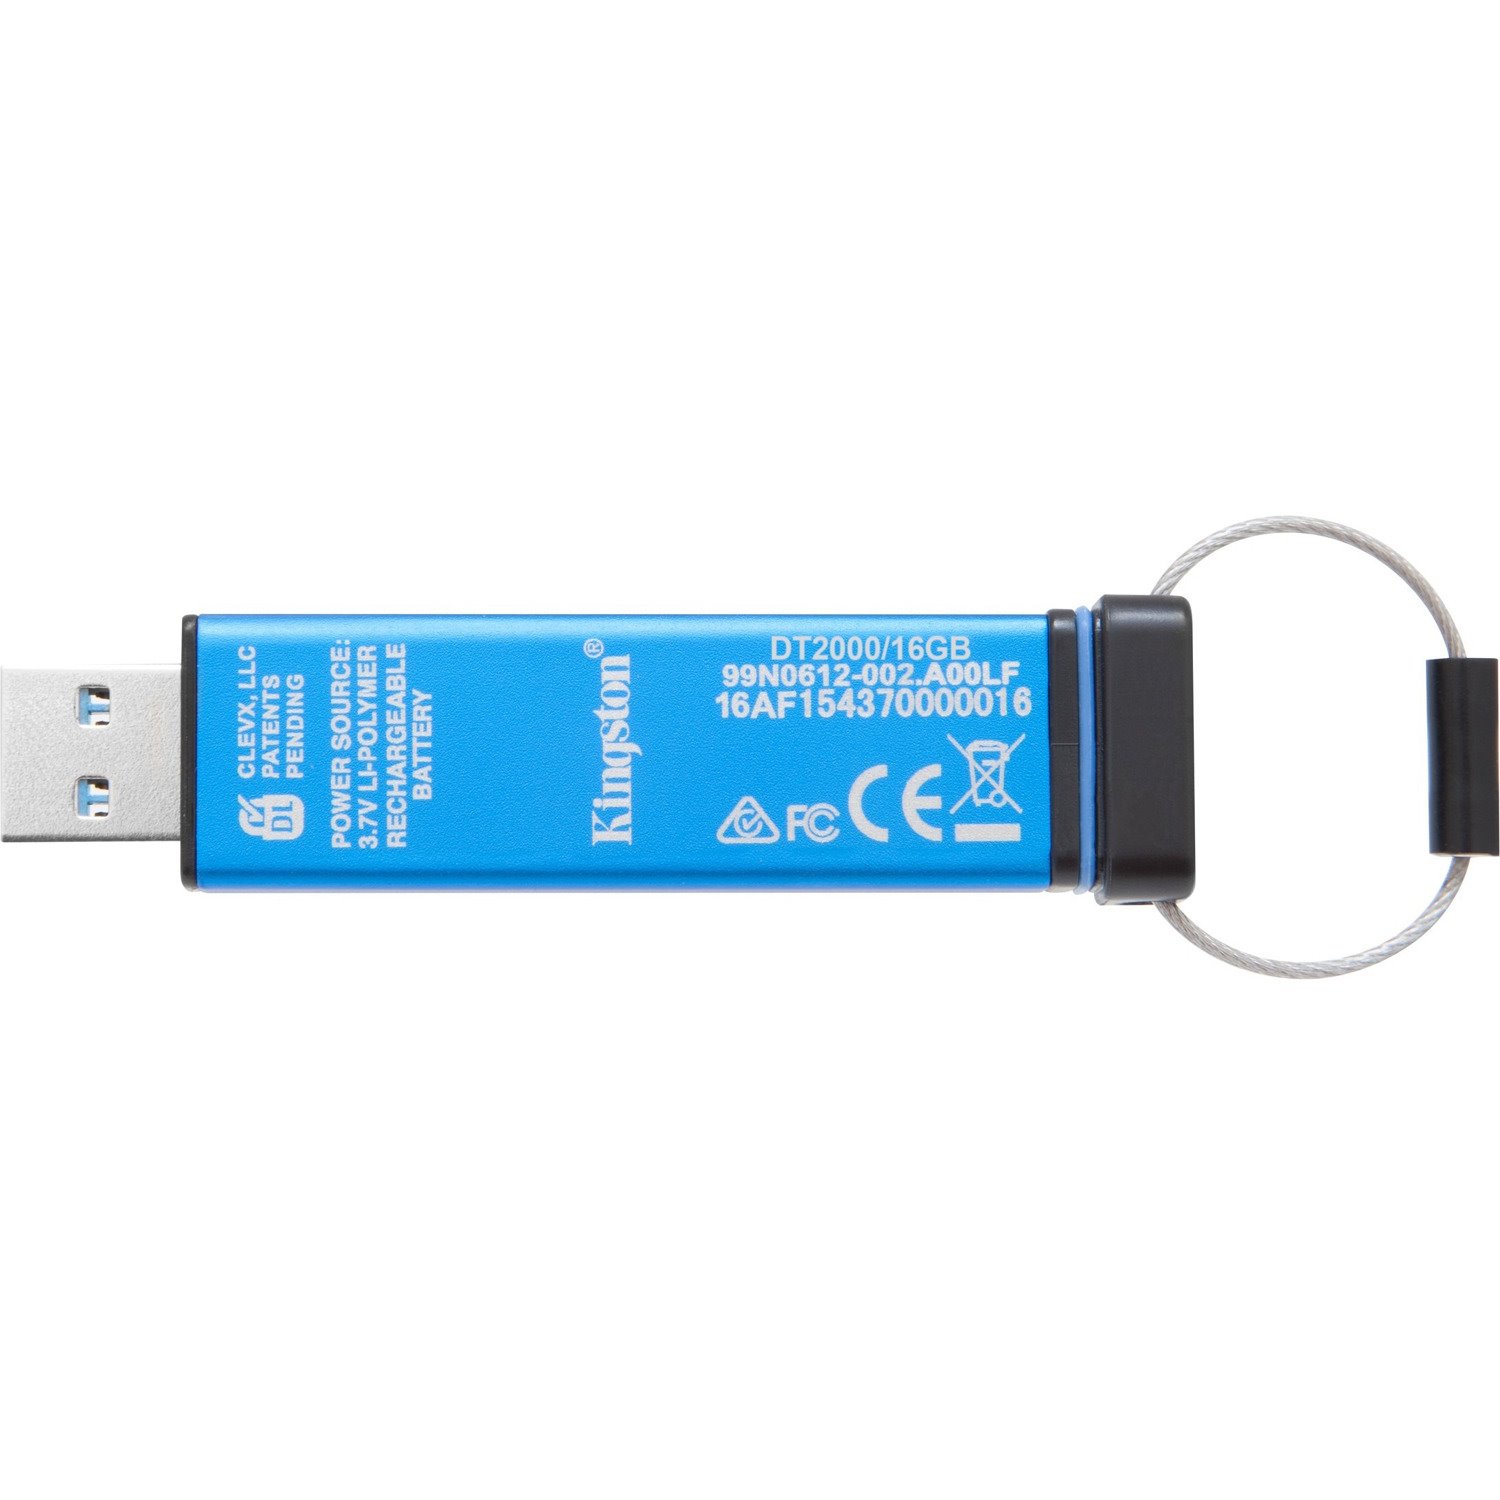 Kingston DataTraveler 2000 DT2000 16 GB USB 3.1 Flash Drive - Blue - 256-bit AES